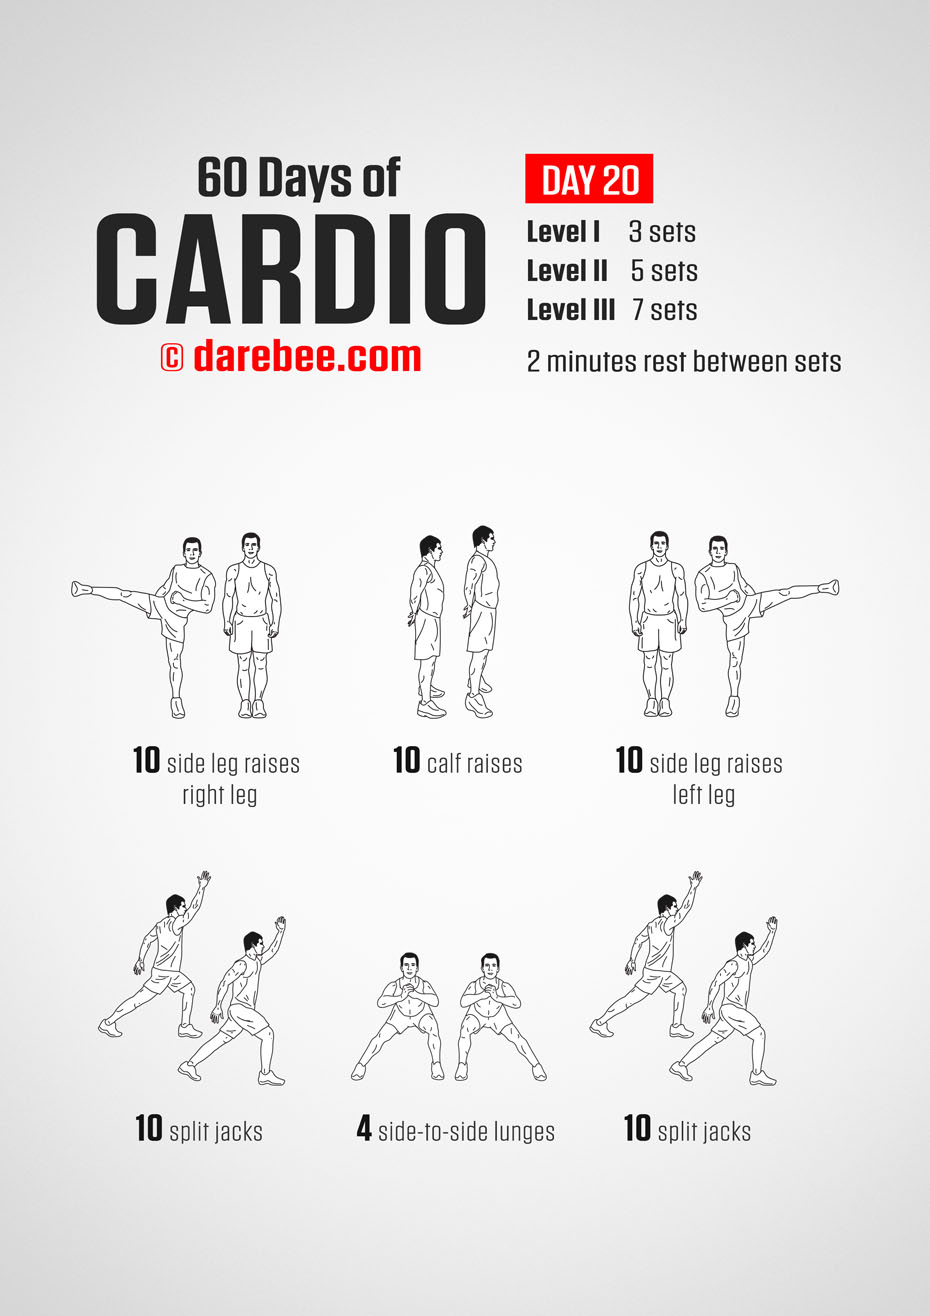 60 Days of Cardio by DAREBEE